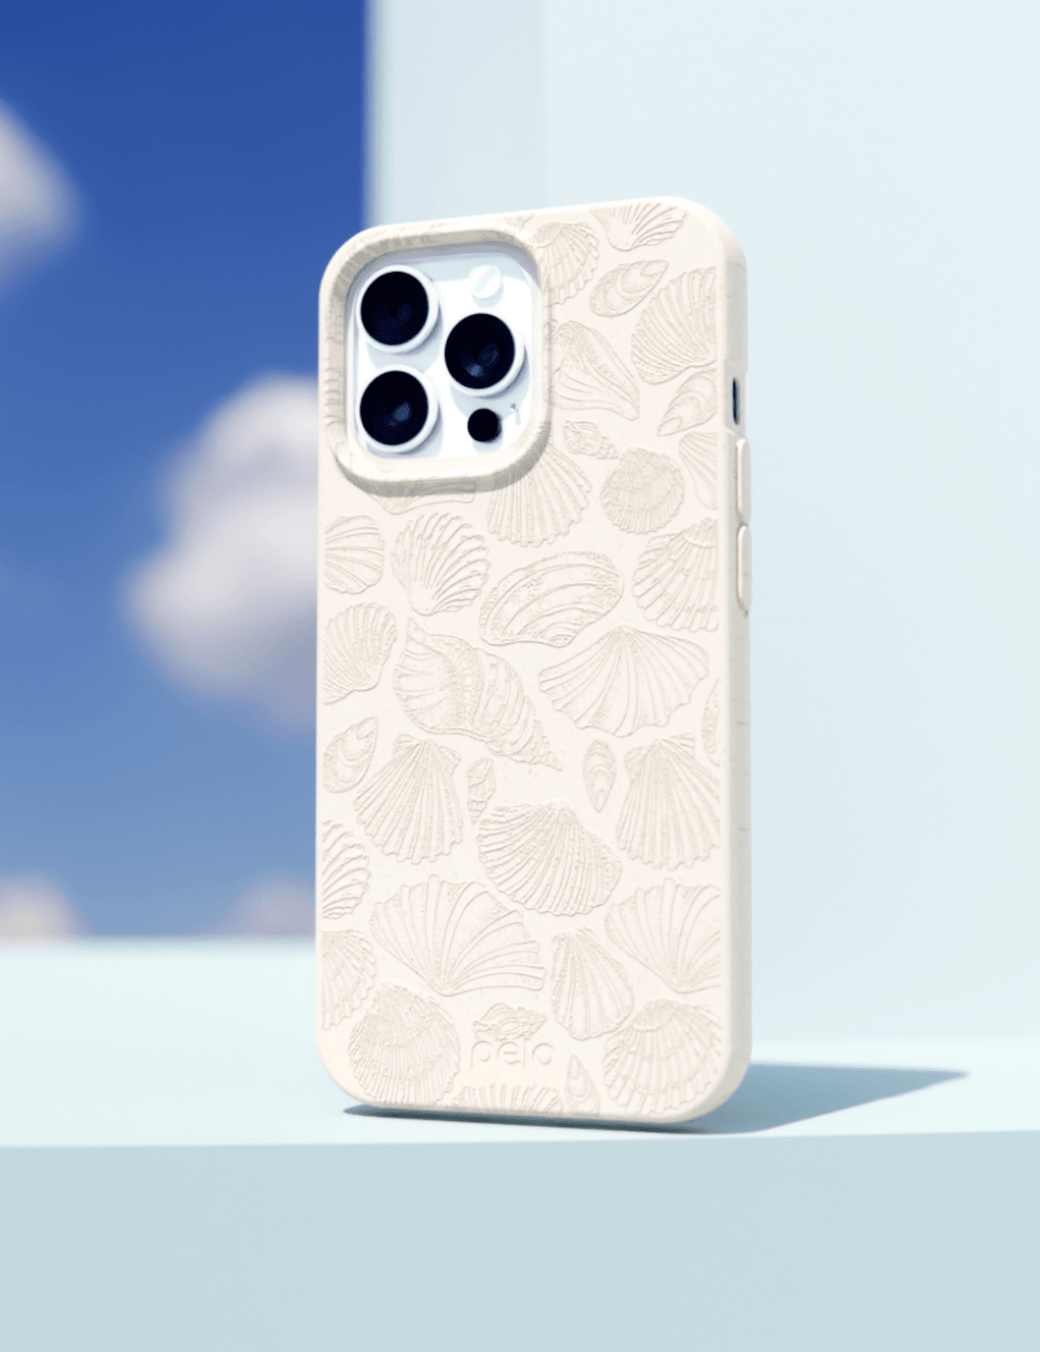 Seashell Seashore iPhone 12 Pro Max Case